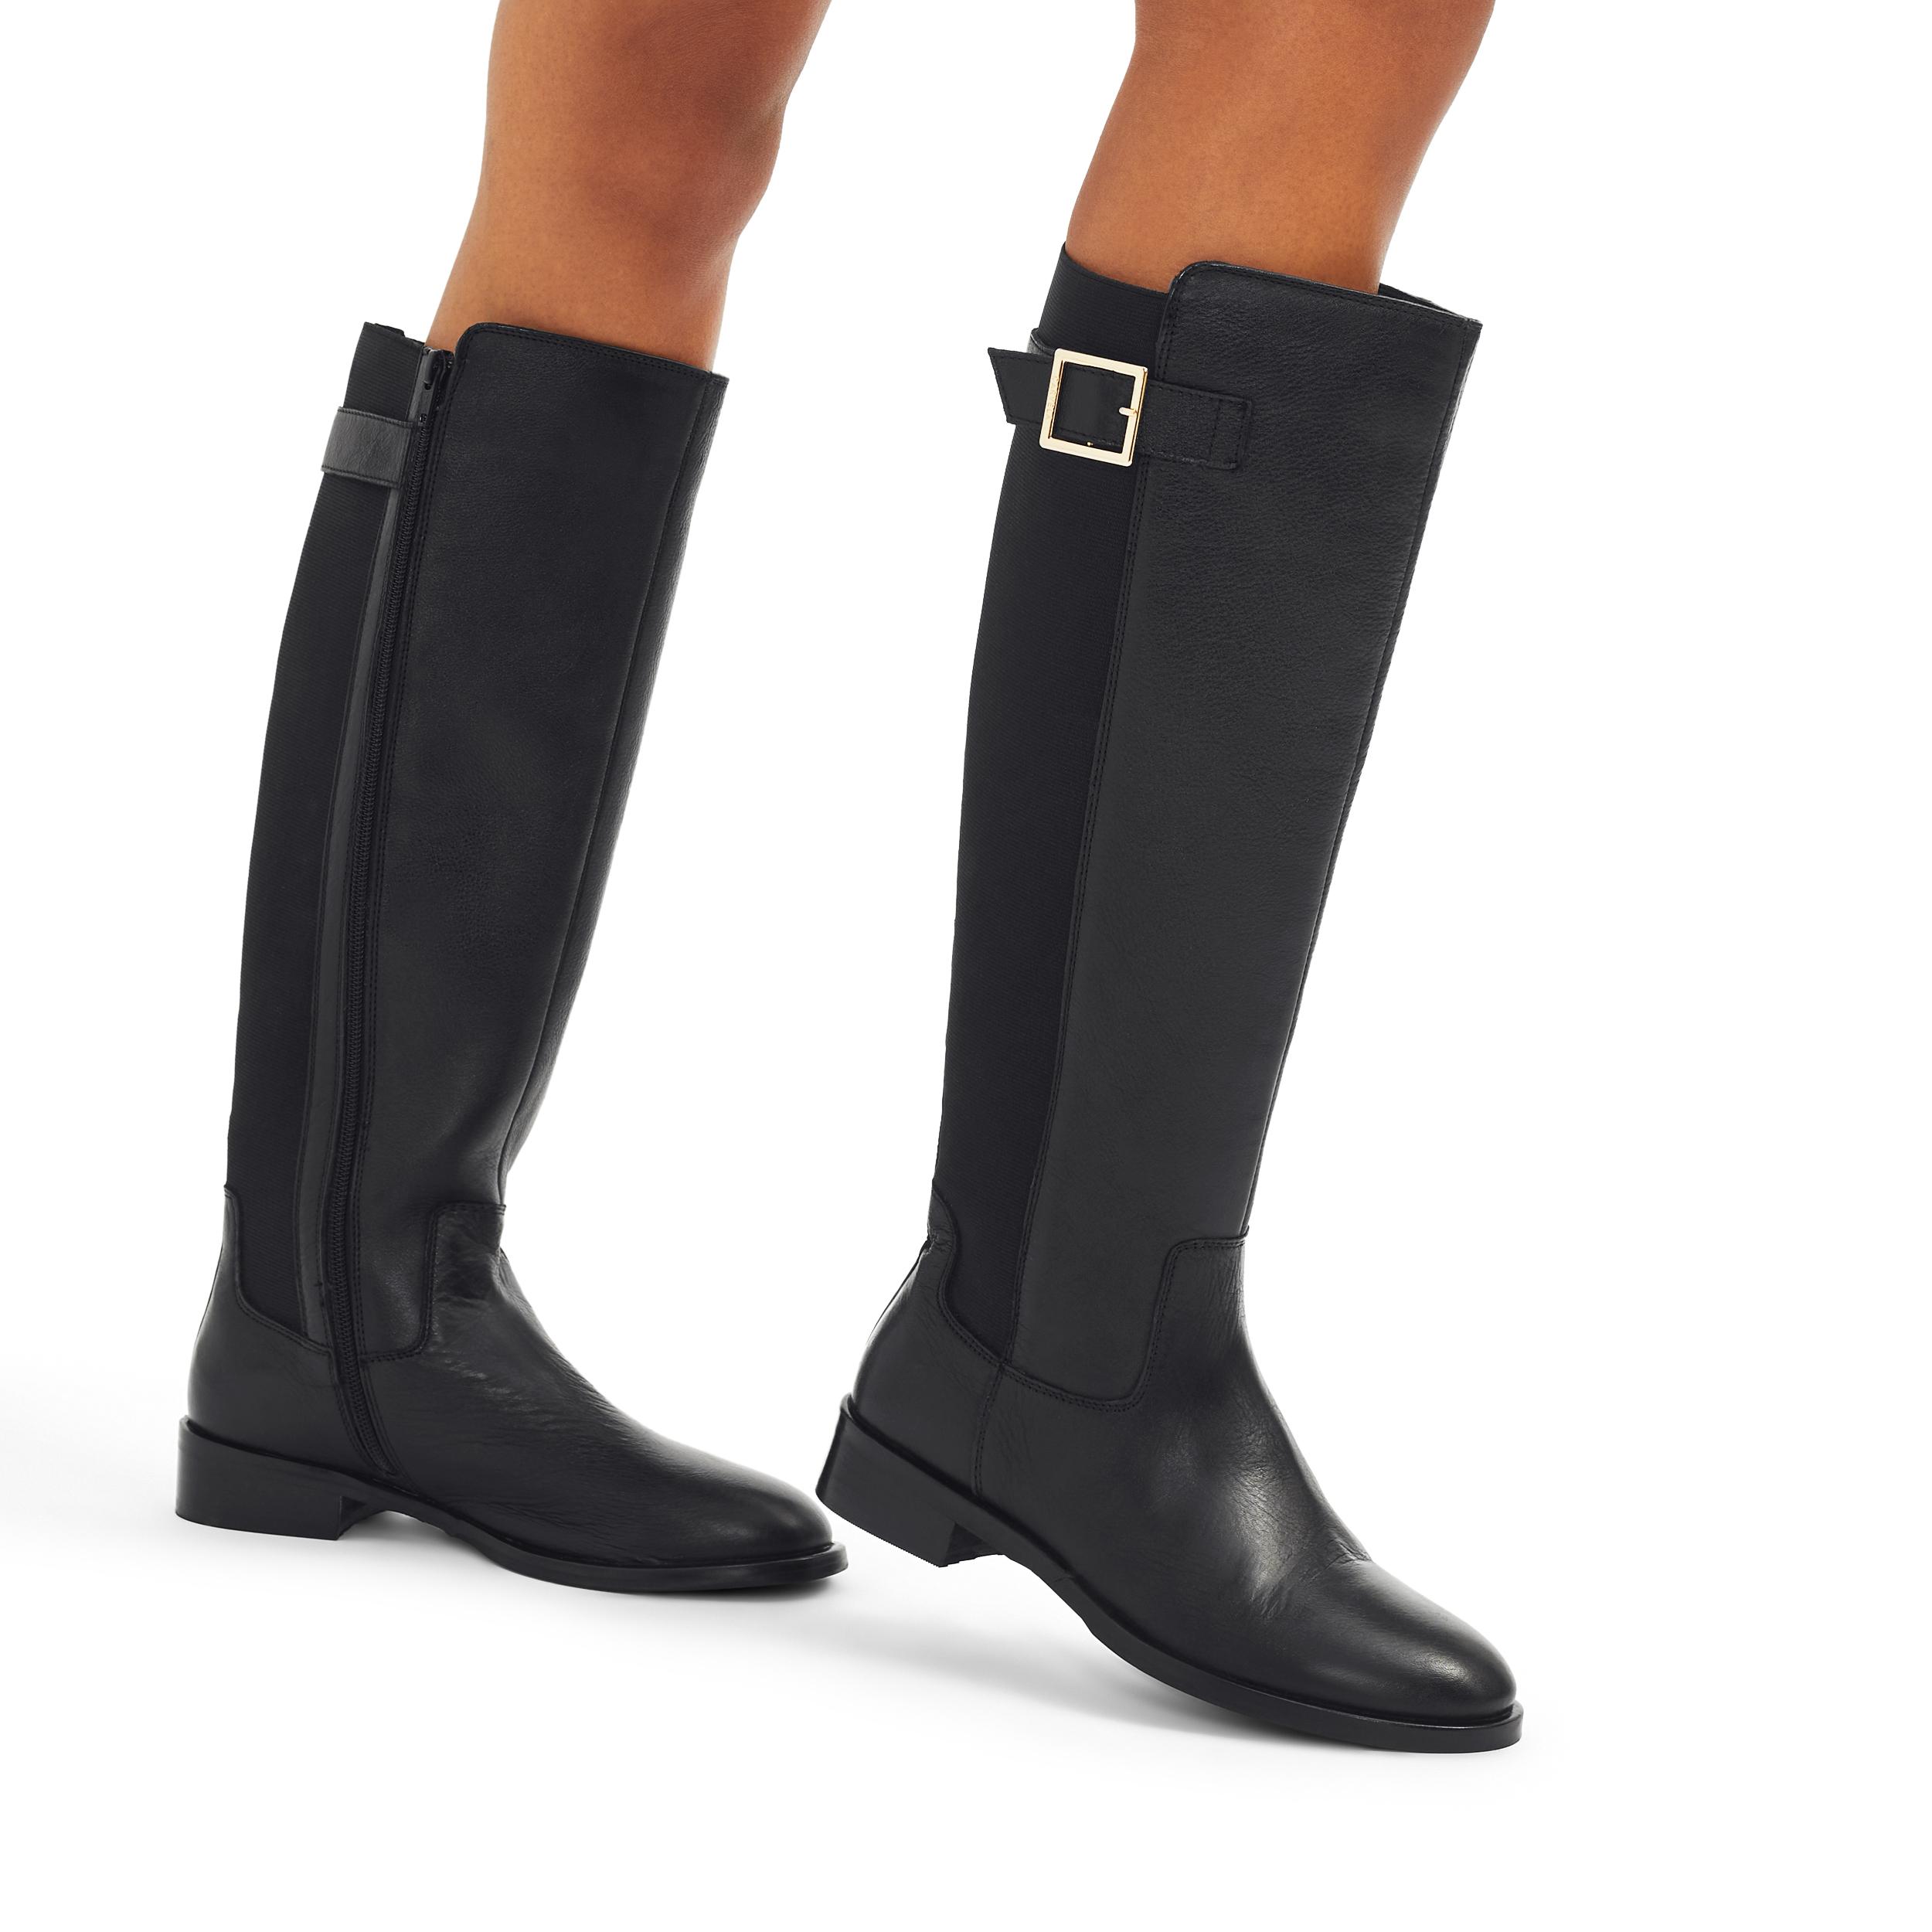 OLYMPIA - CARVELA High Leg Boots